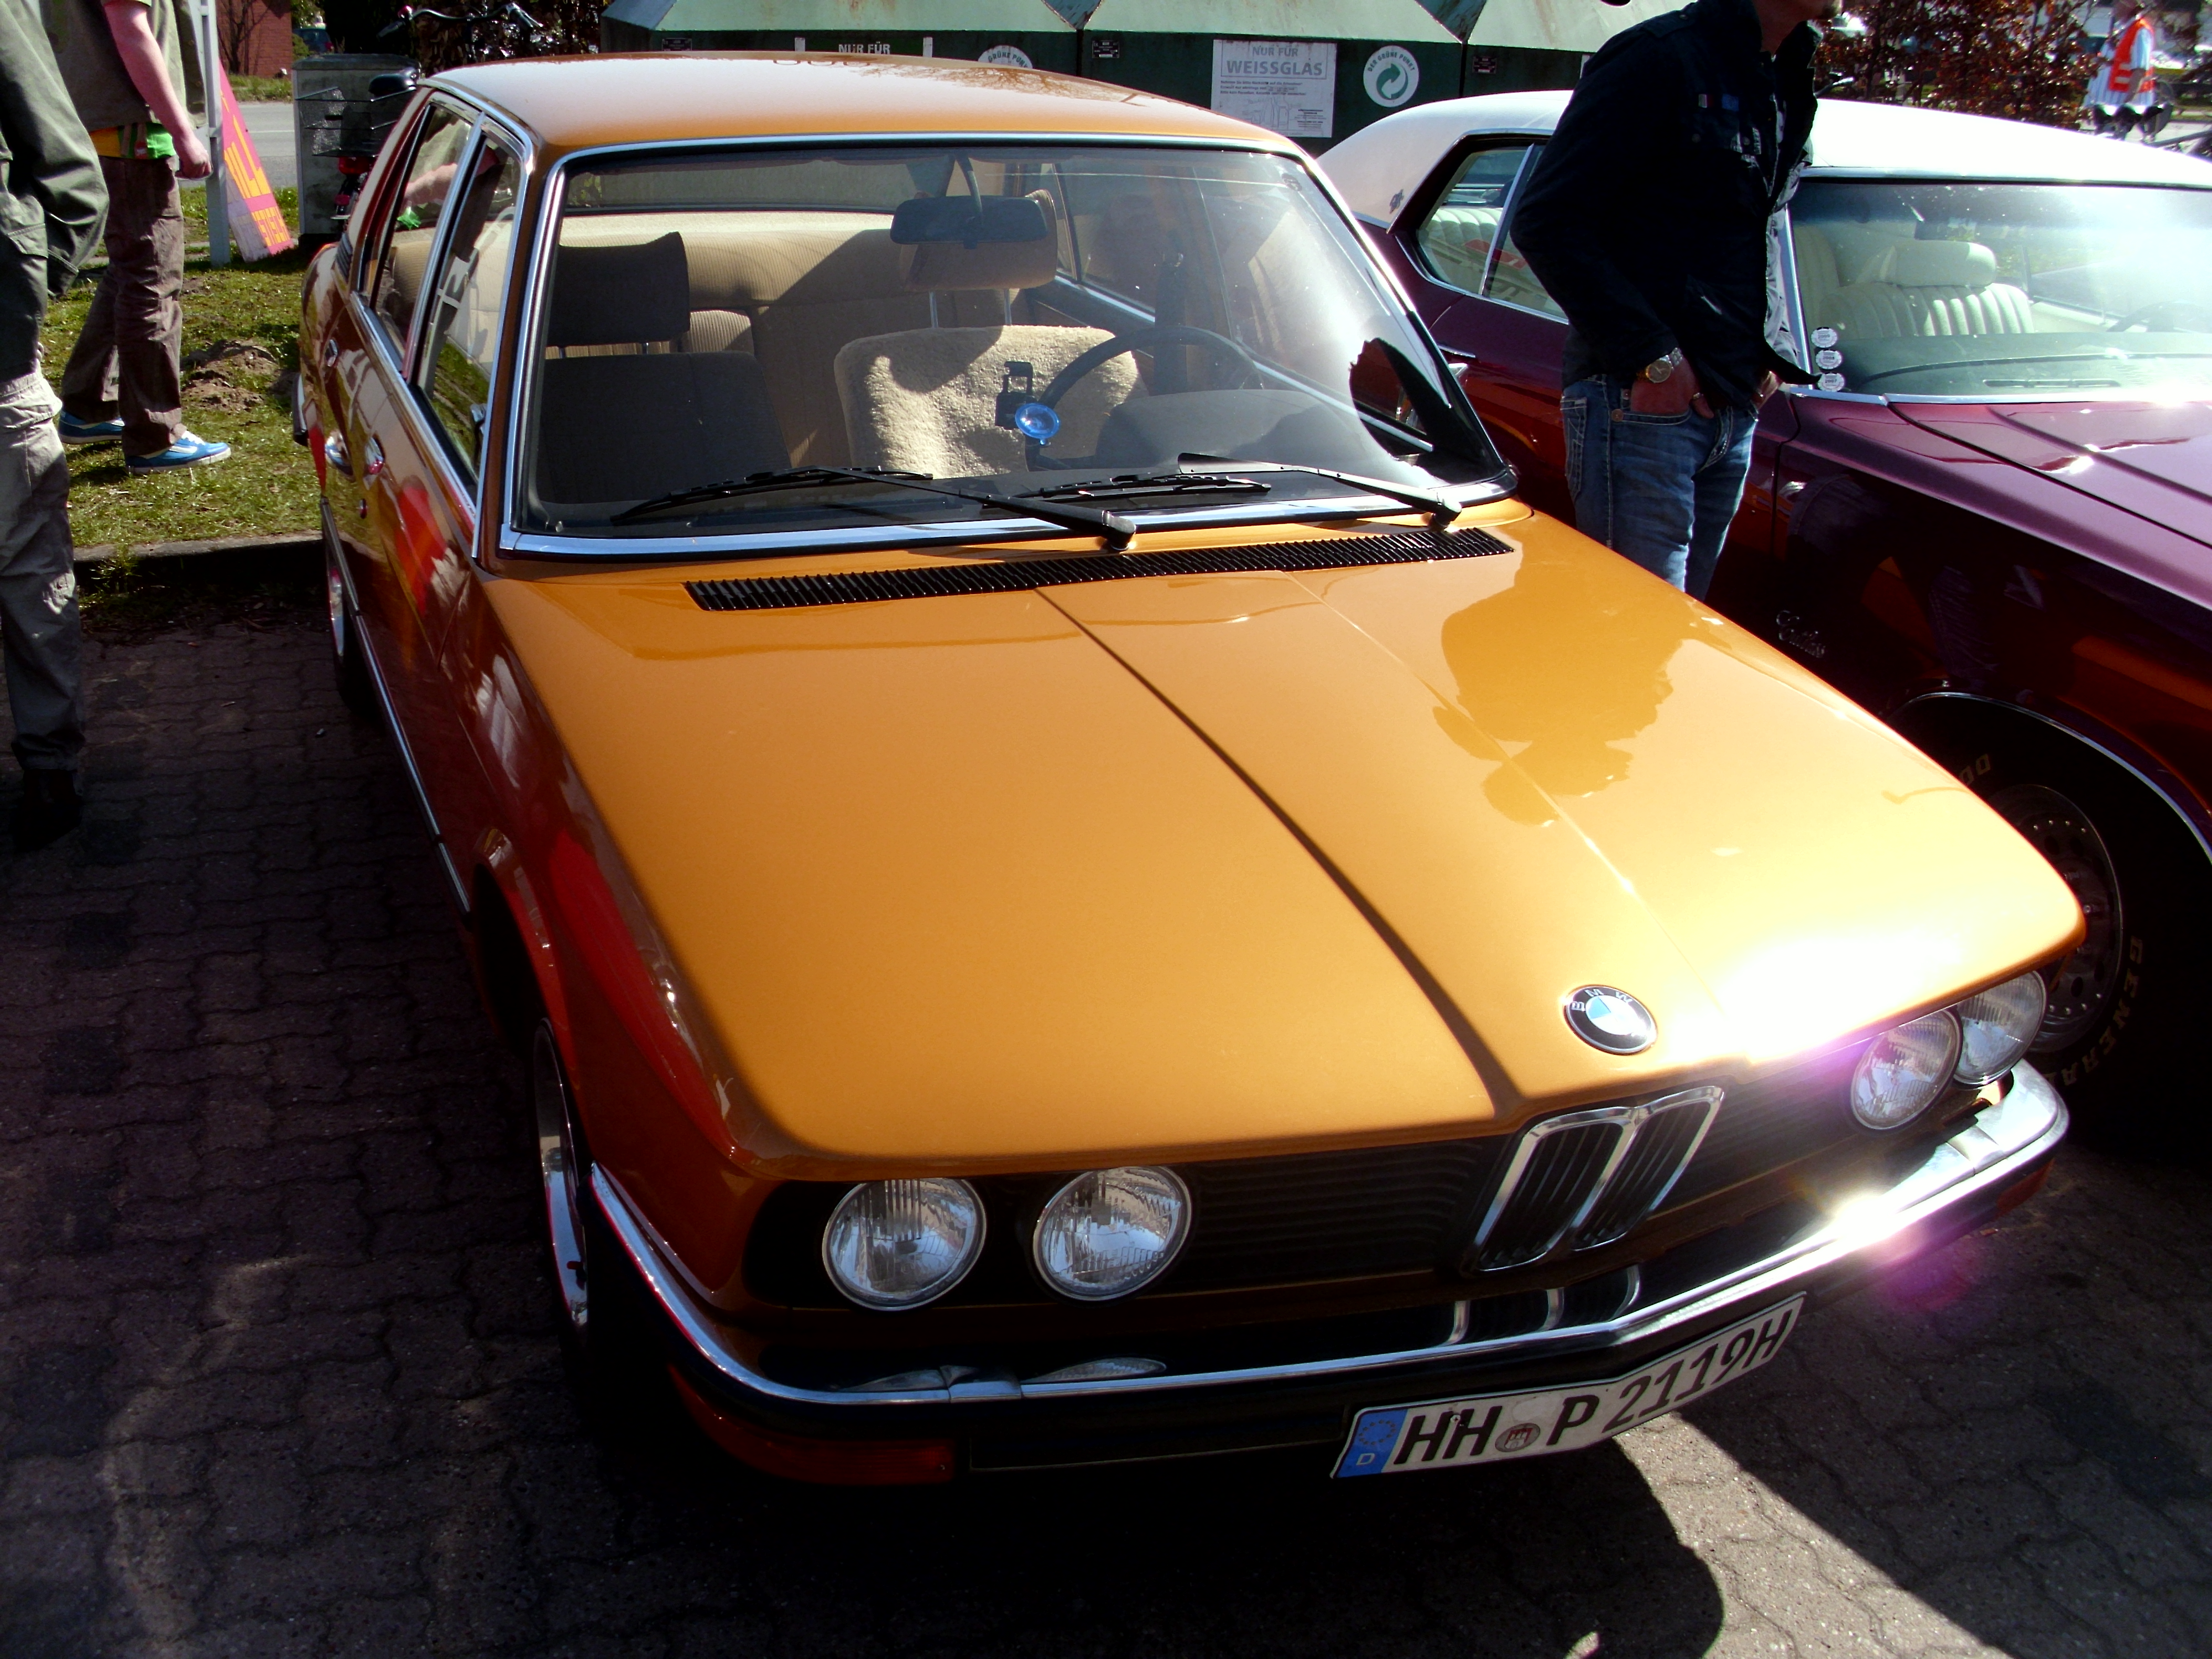 BMW 520 1976 -3- | Flickr - Photo Sharing!